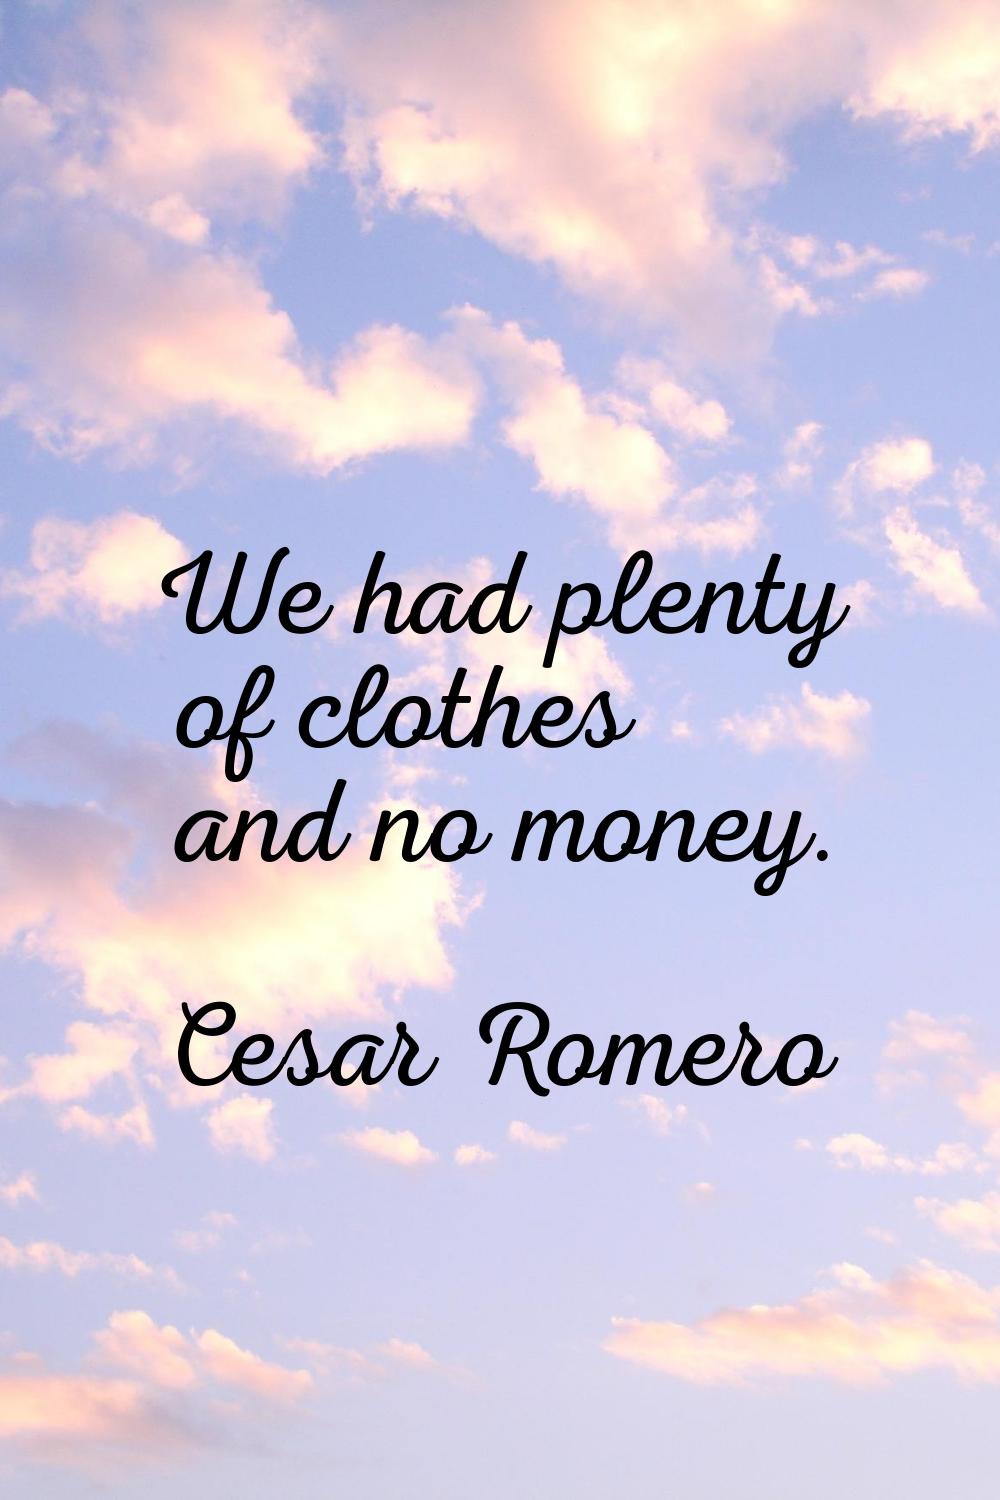 We had plenty of clothes and no money.